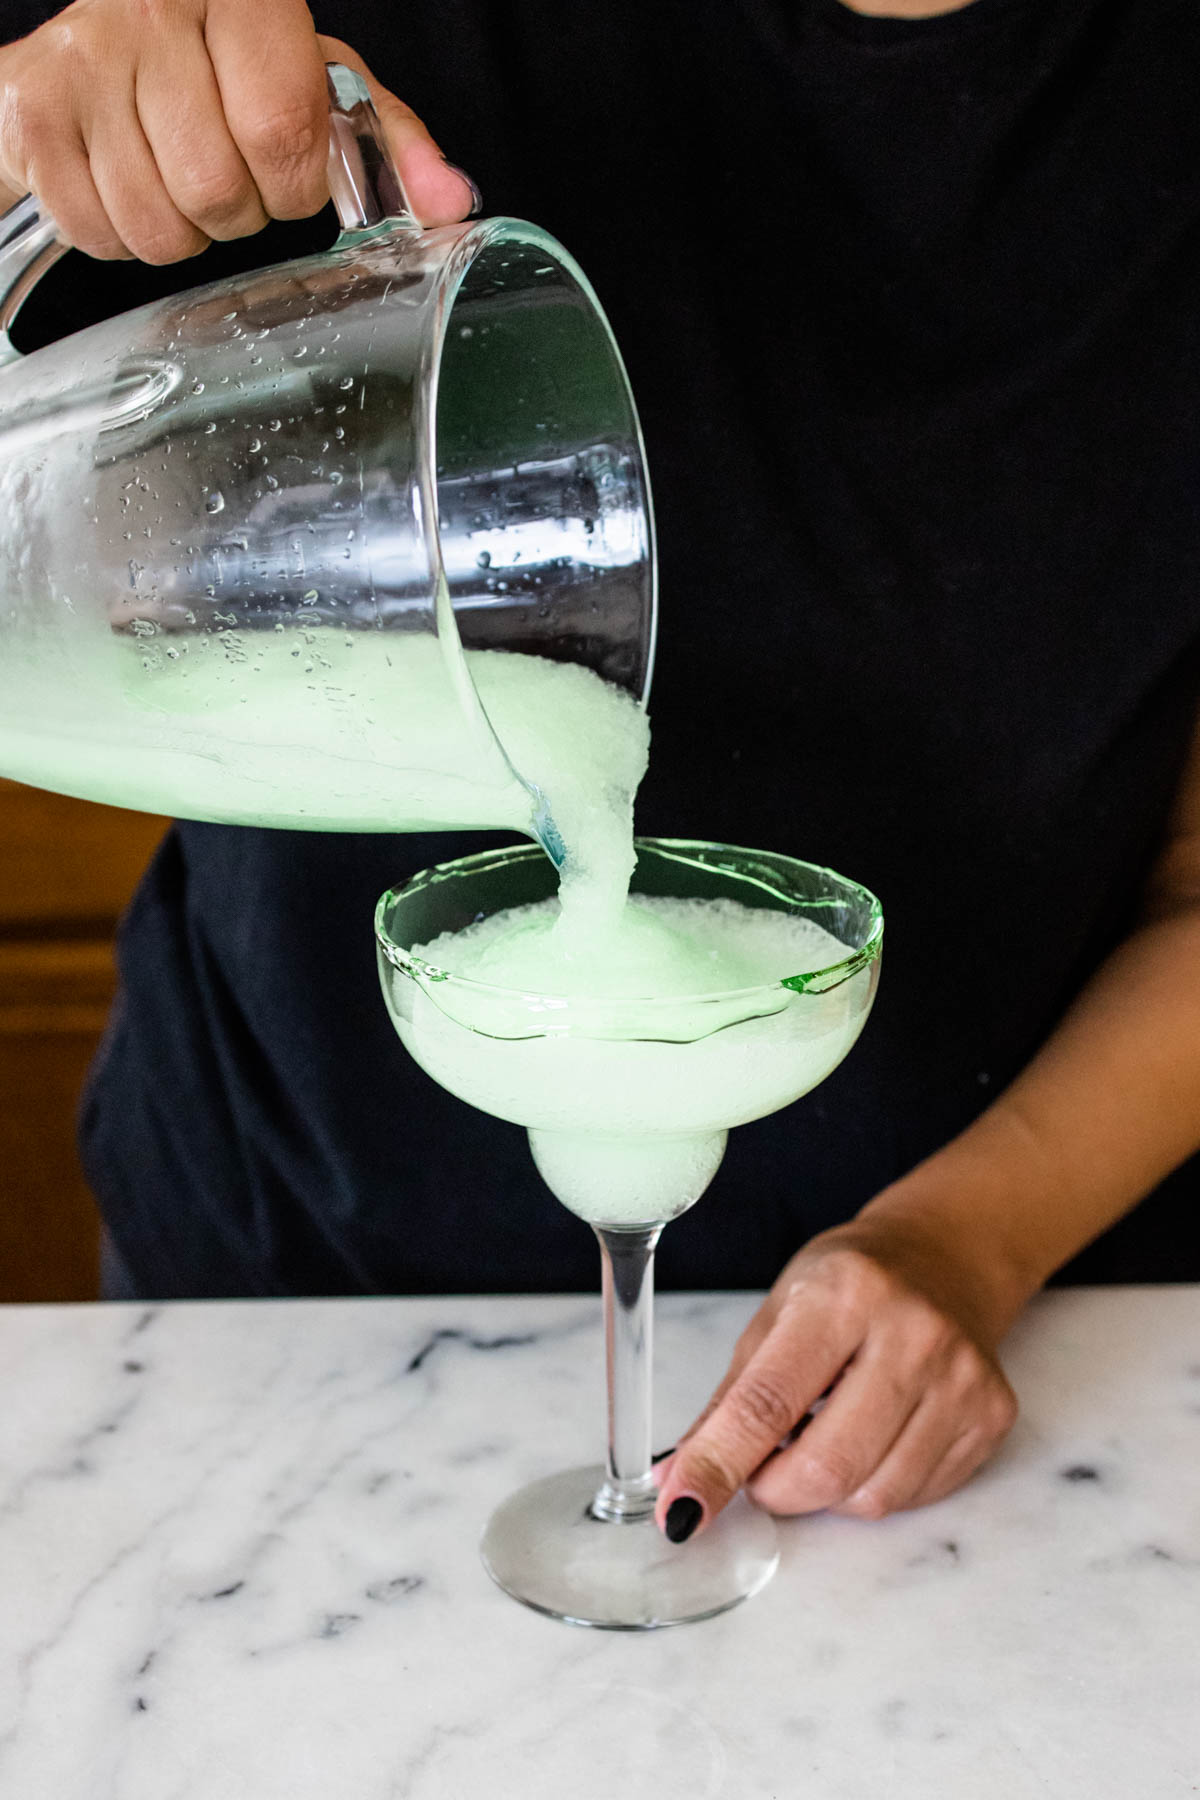 Woman pouring a frozen green Ghostbusters margarita into a margarita glass.